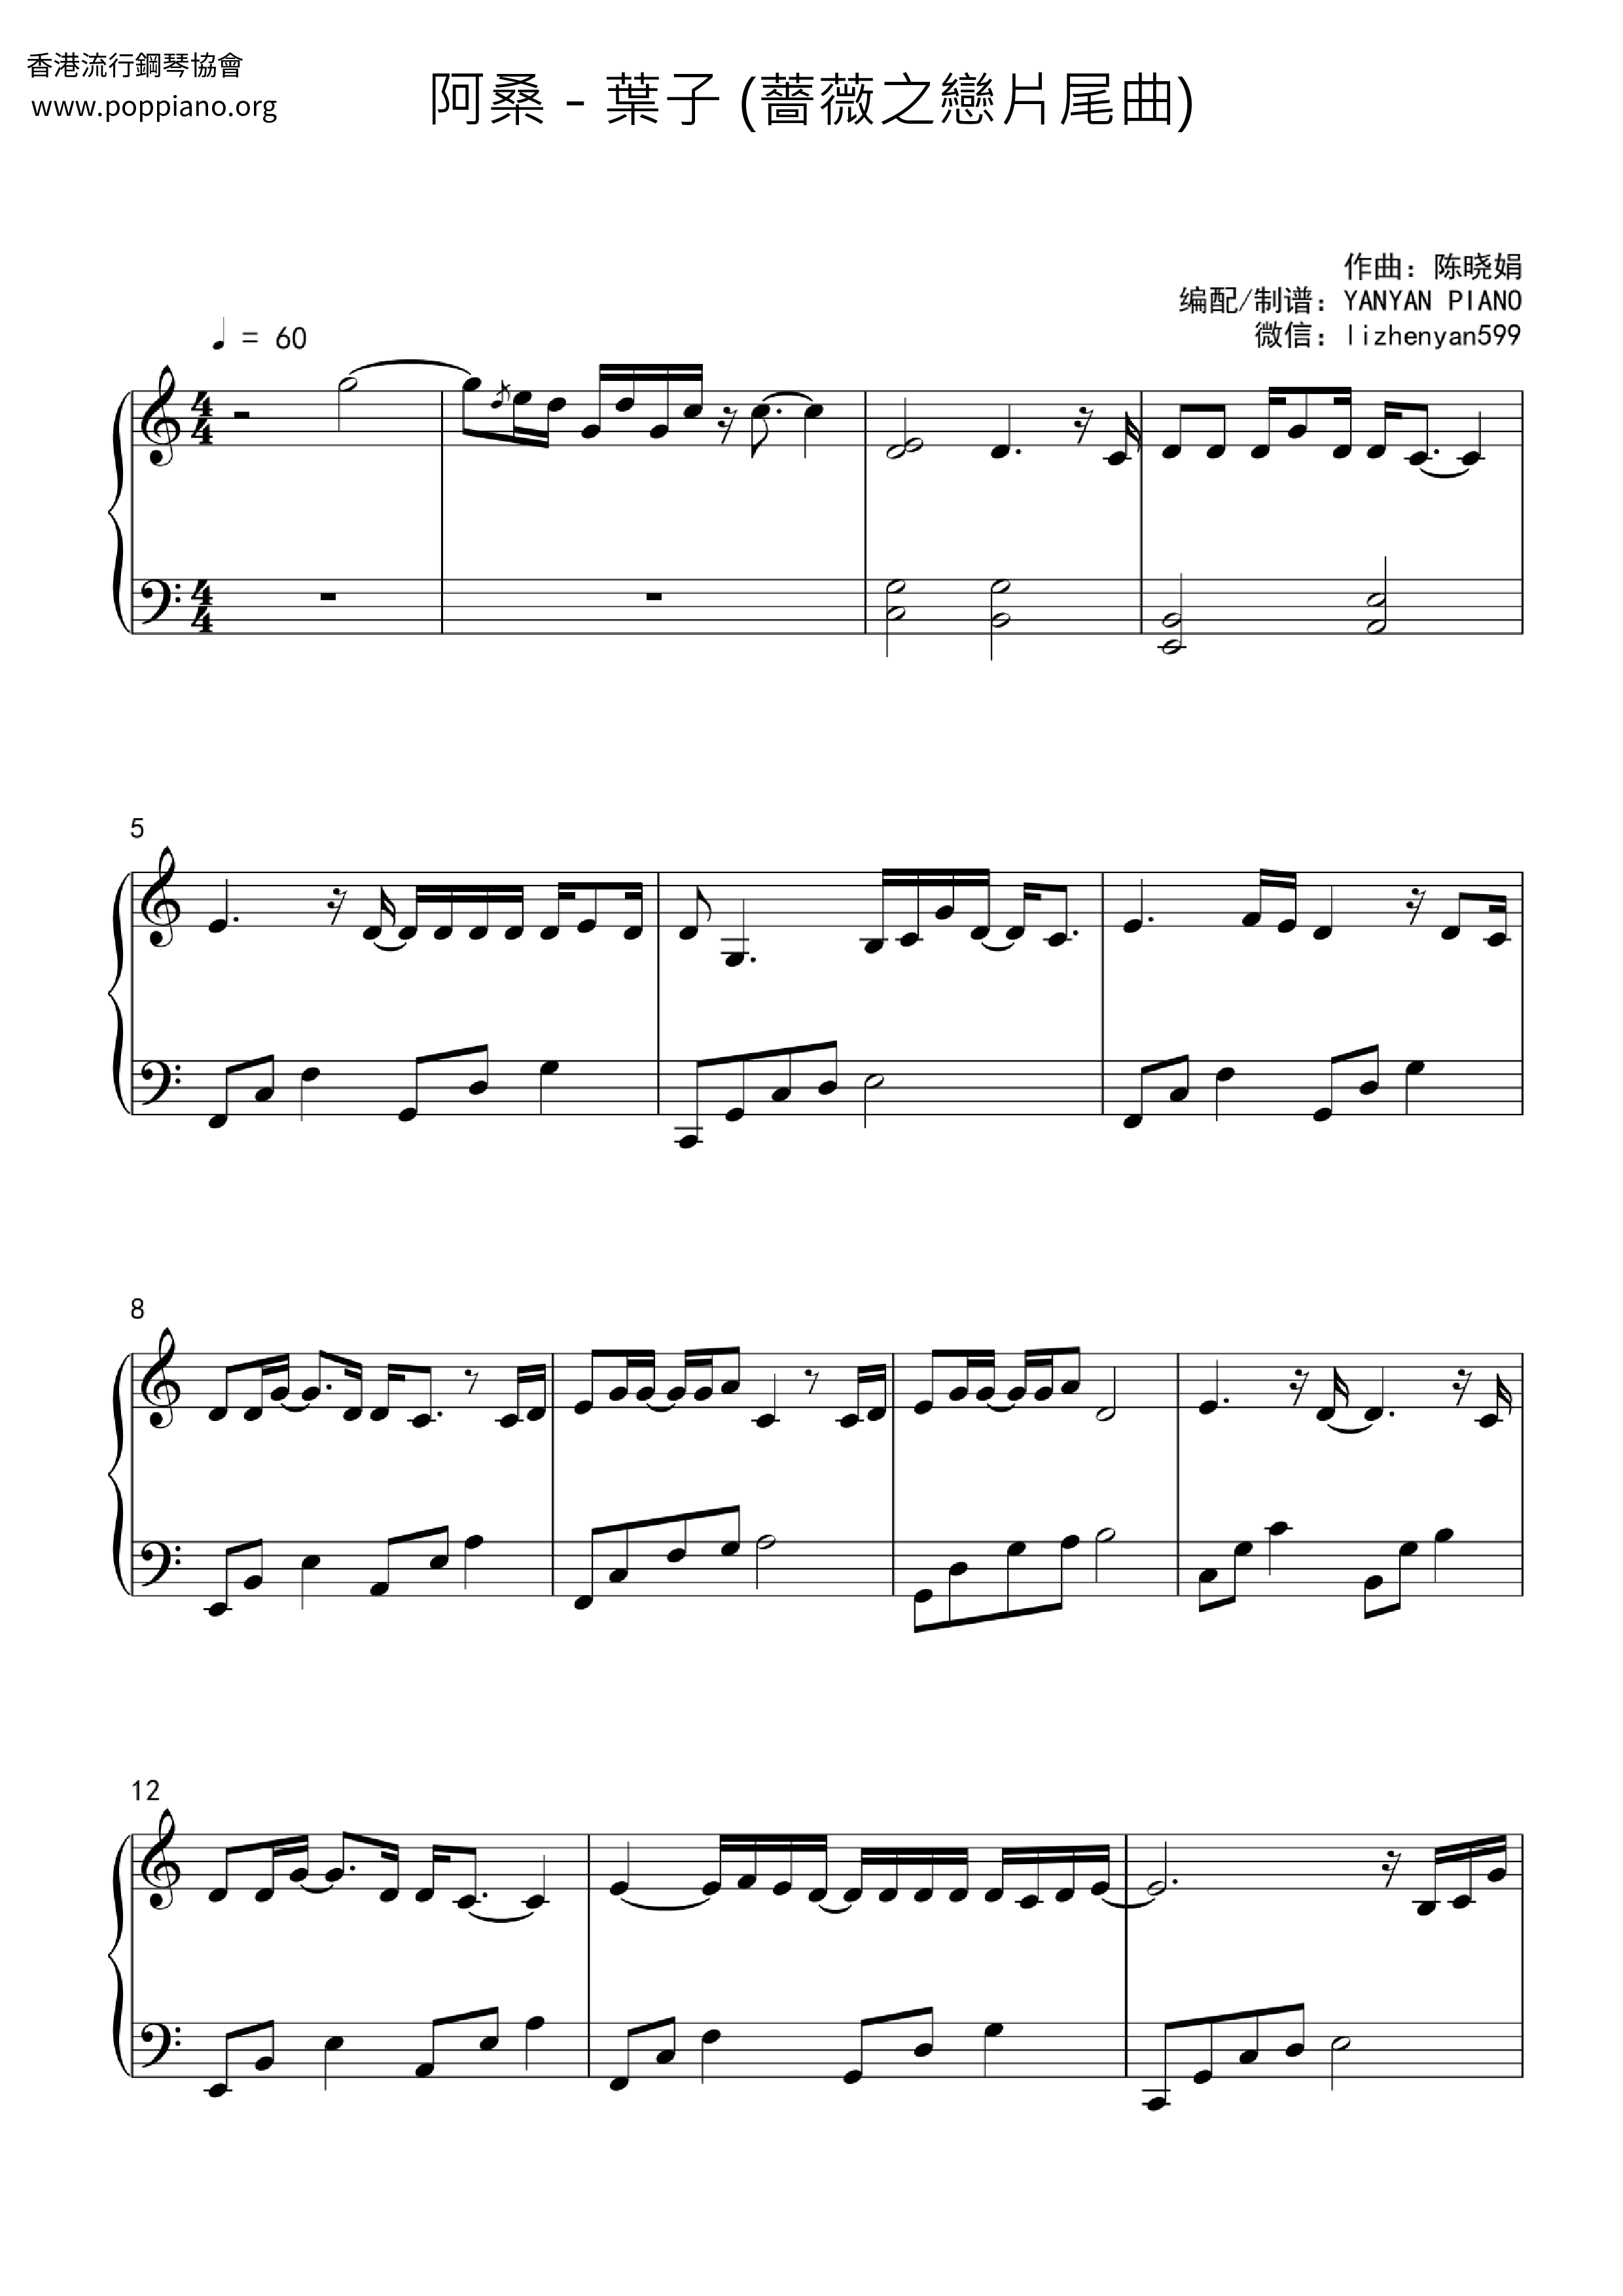 Leaf (Ending Song Of Rose Love) Score